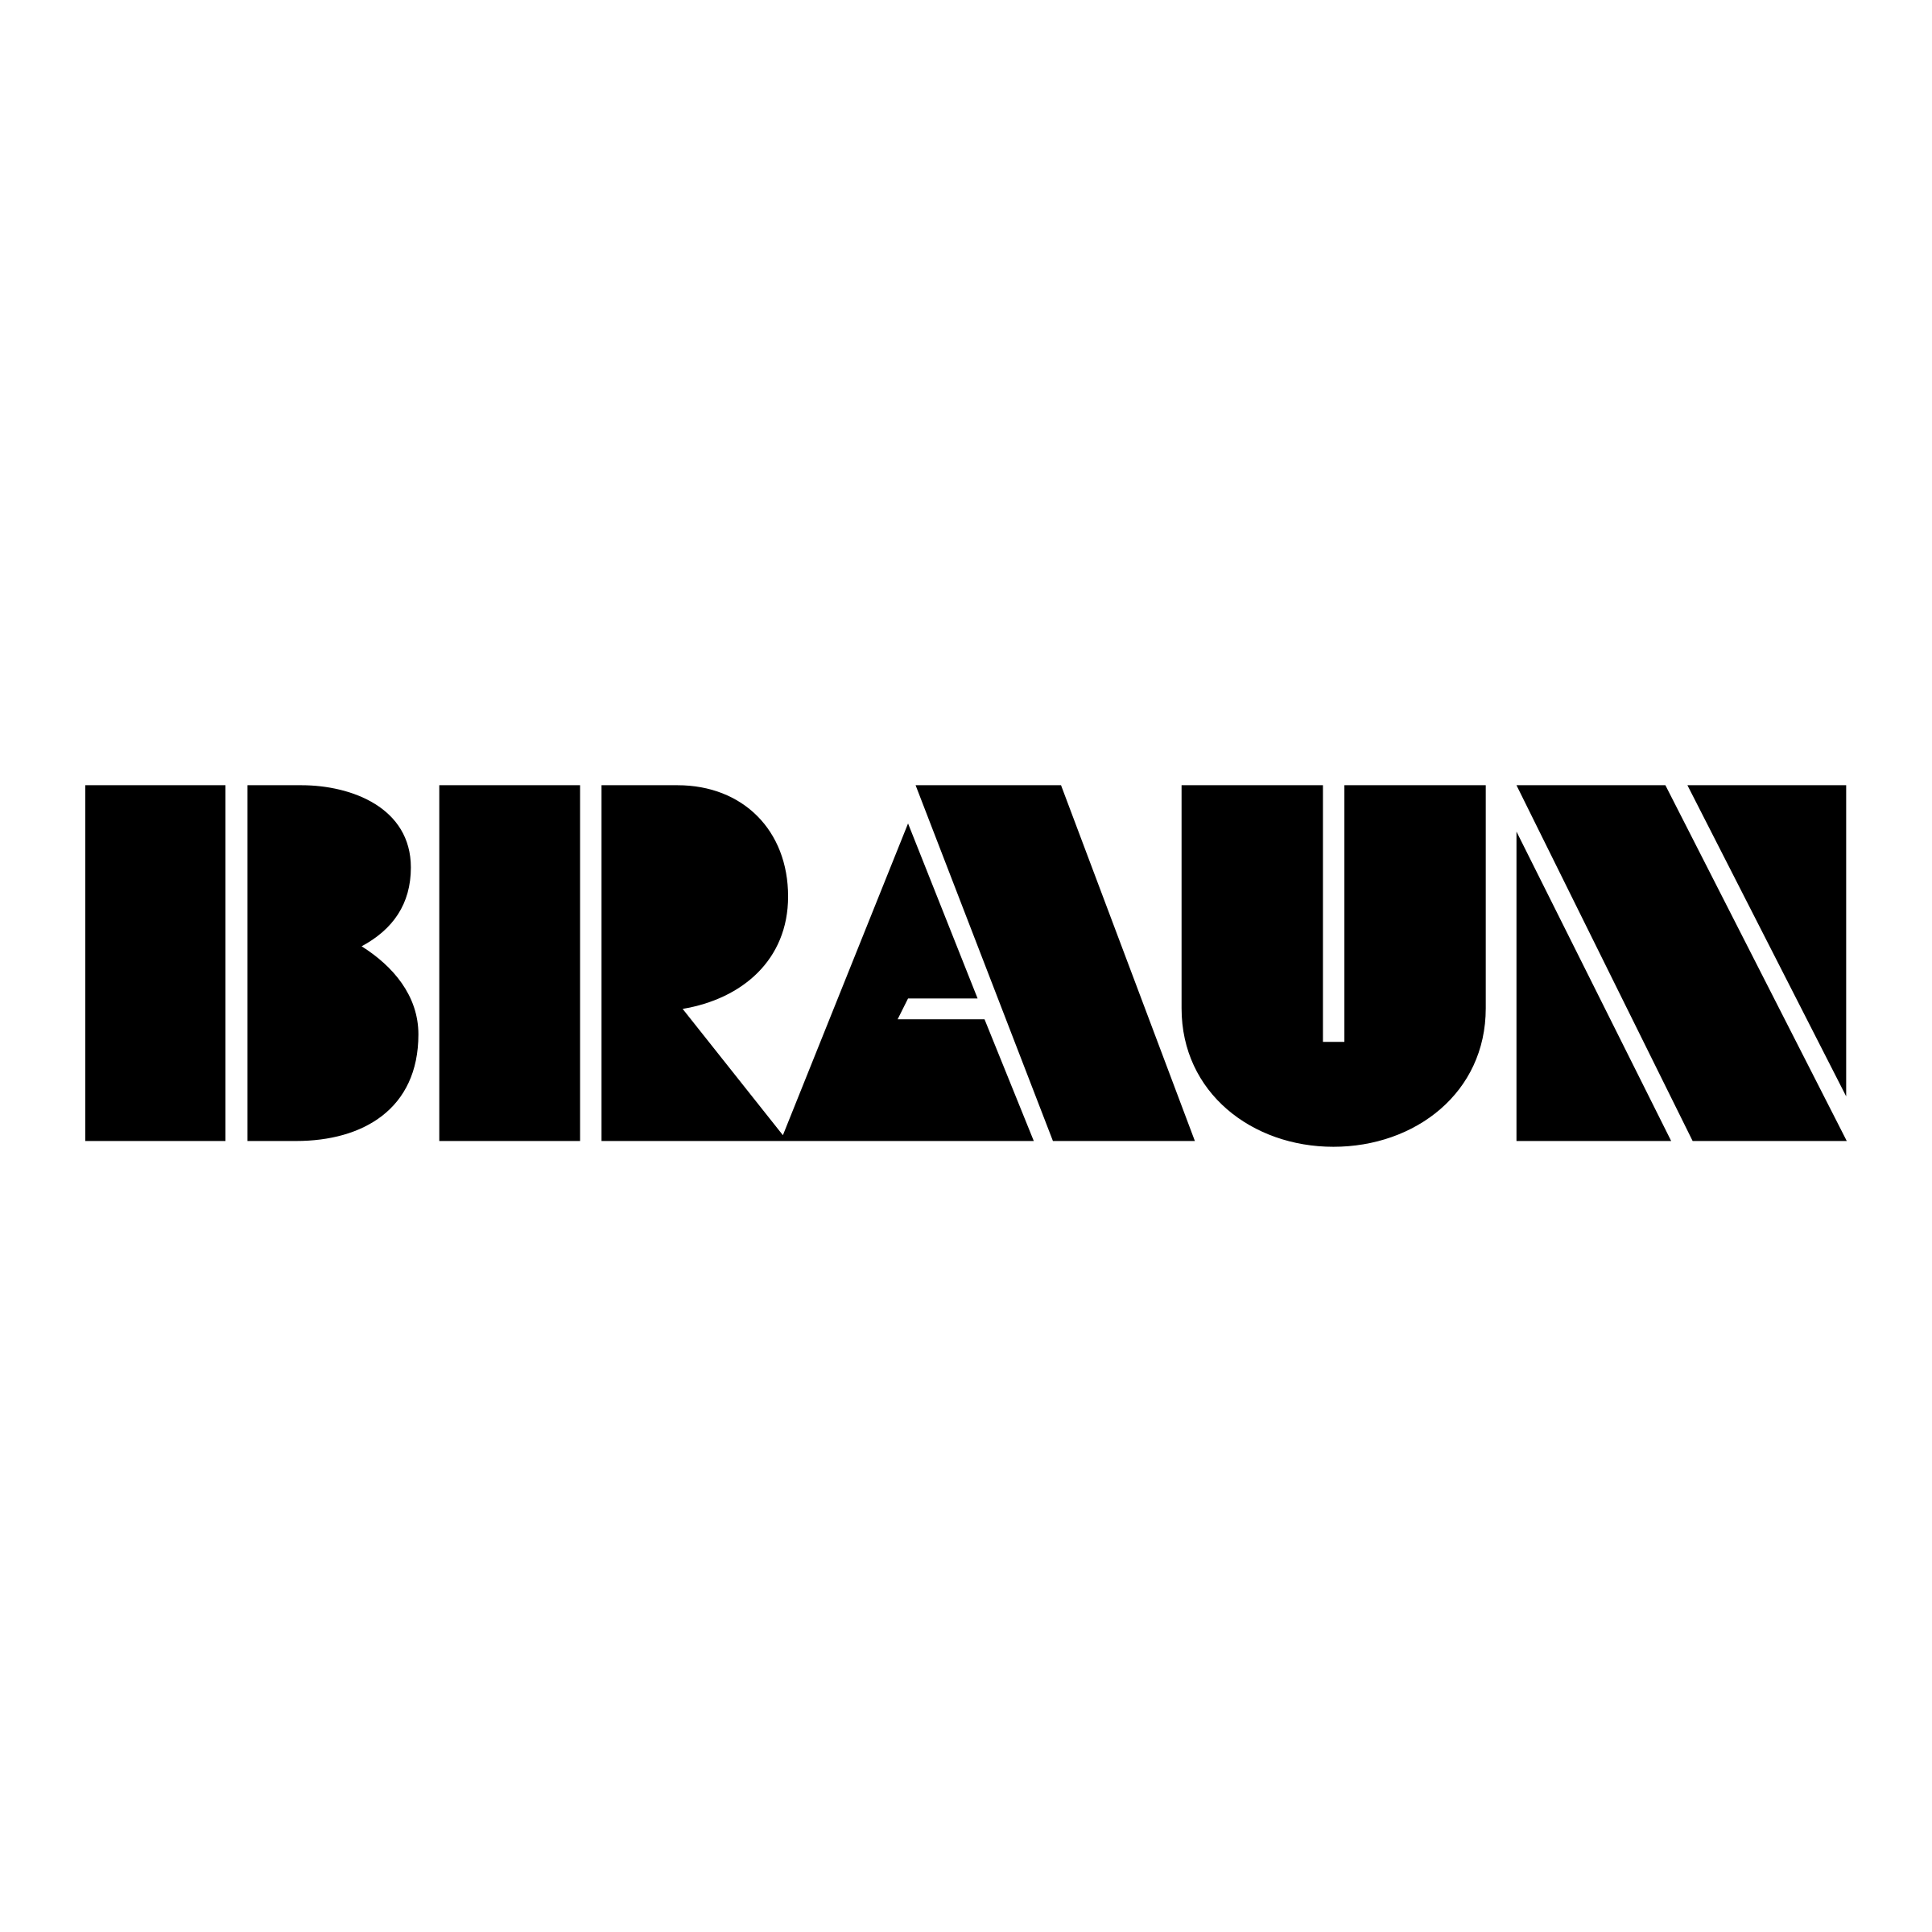 Braun Logo - Braun Logo PNG Transparent & SVG Vector - Freebie Supply